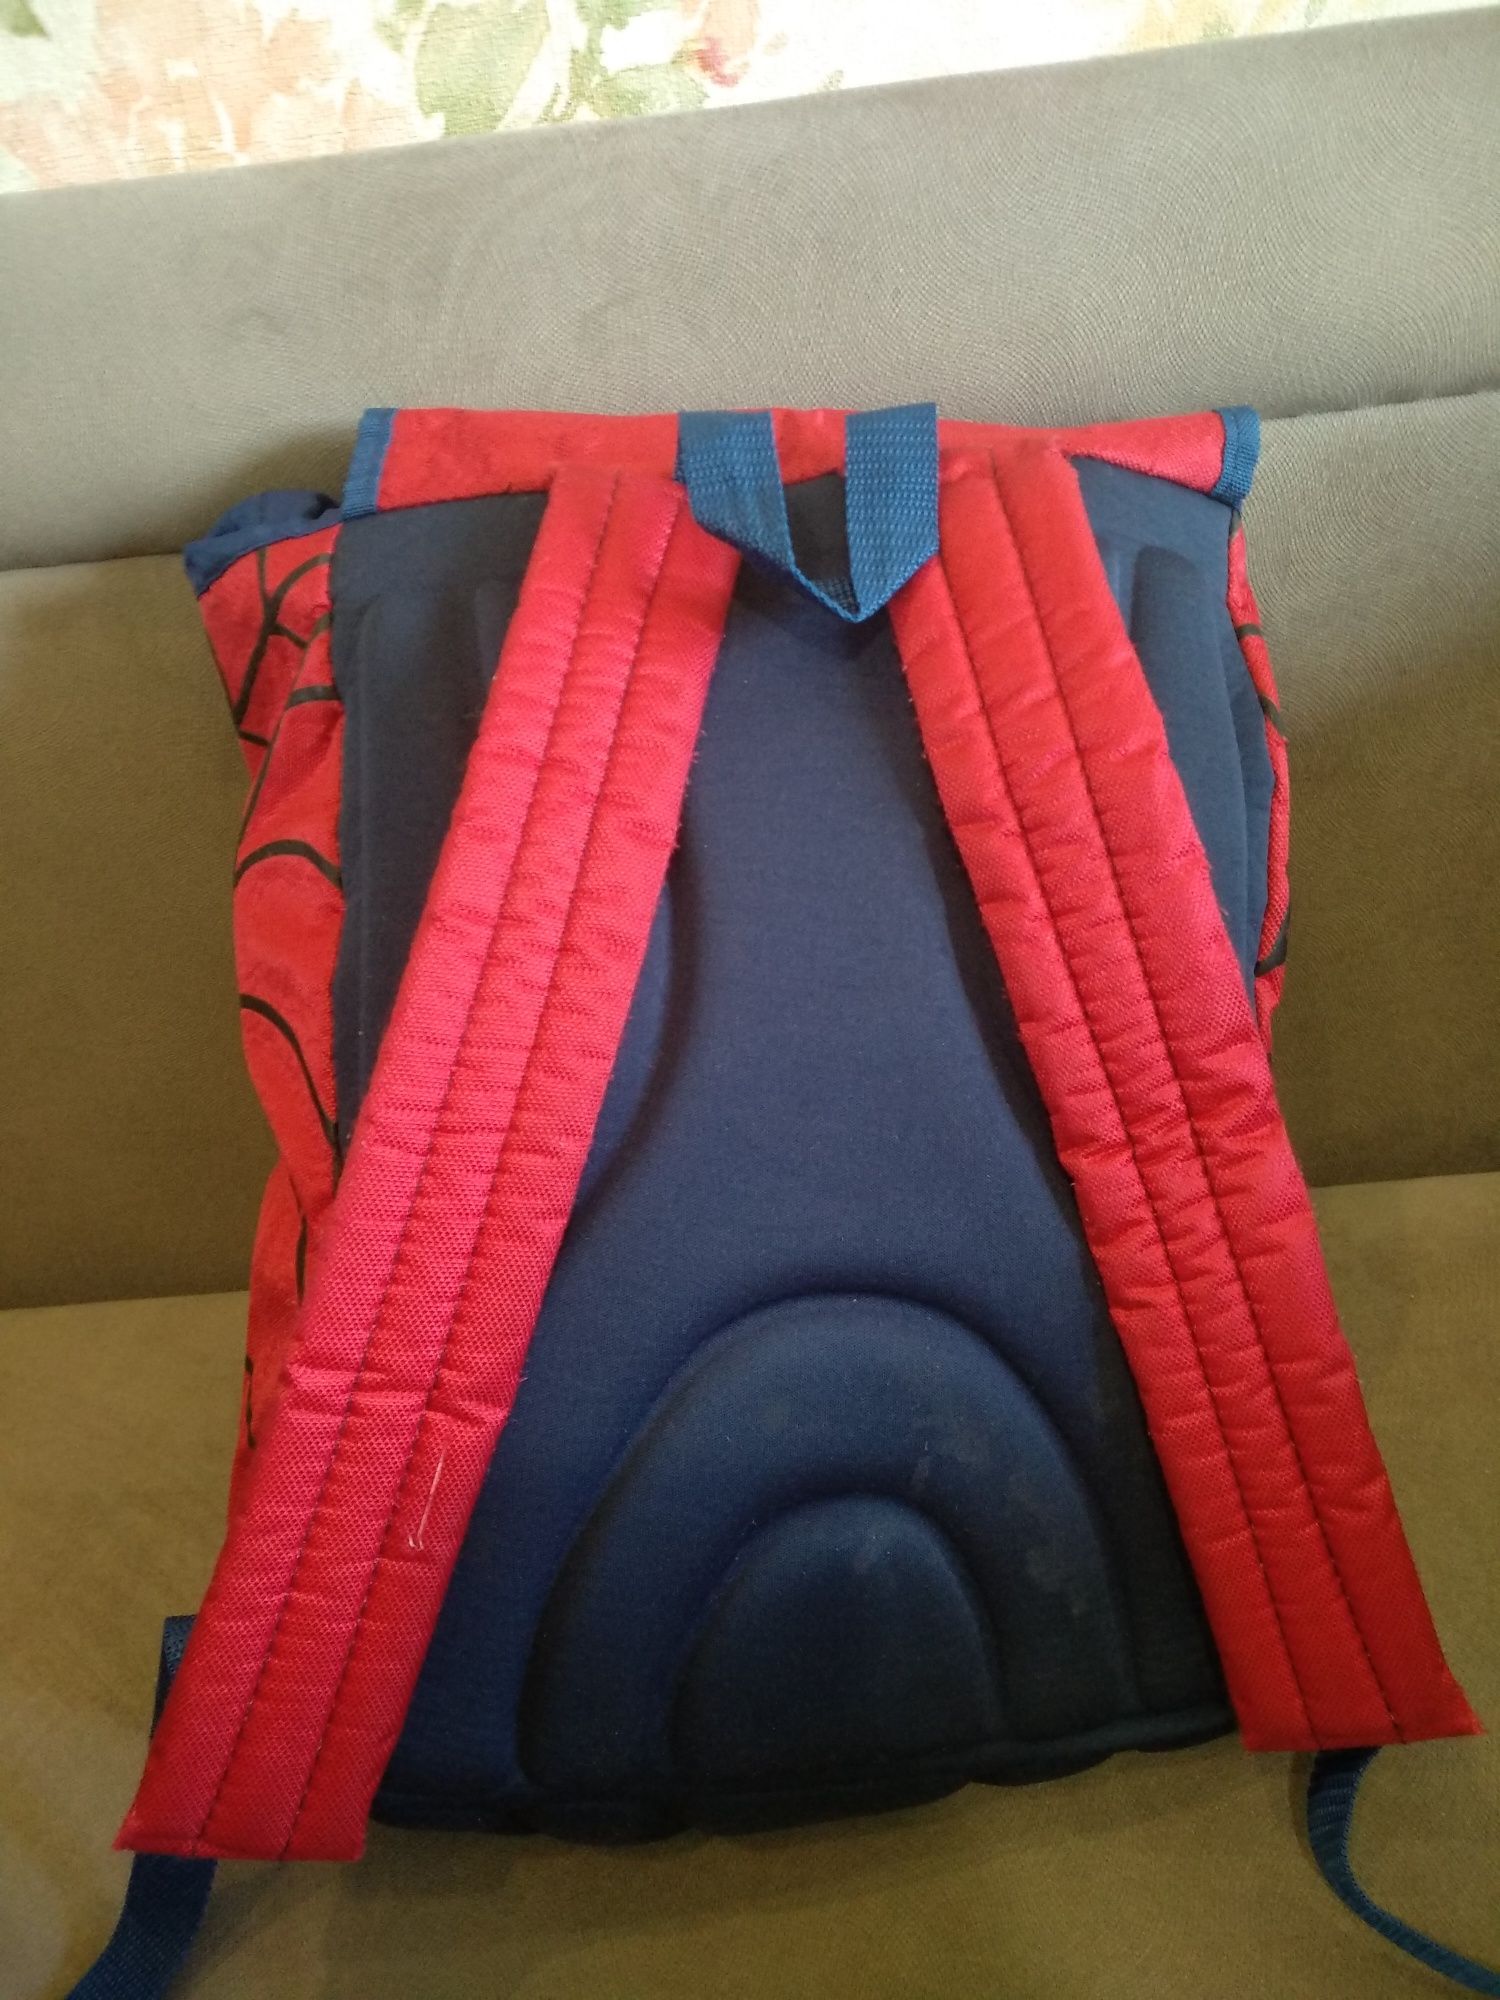 Рюкзак Spider Man